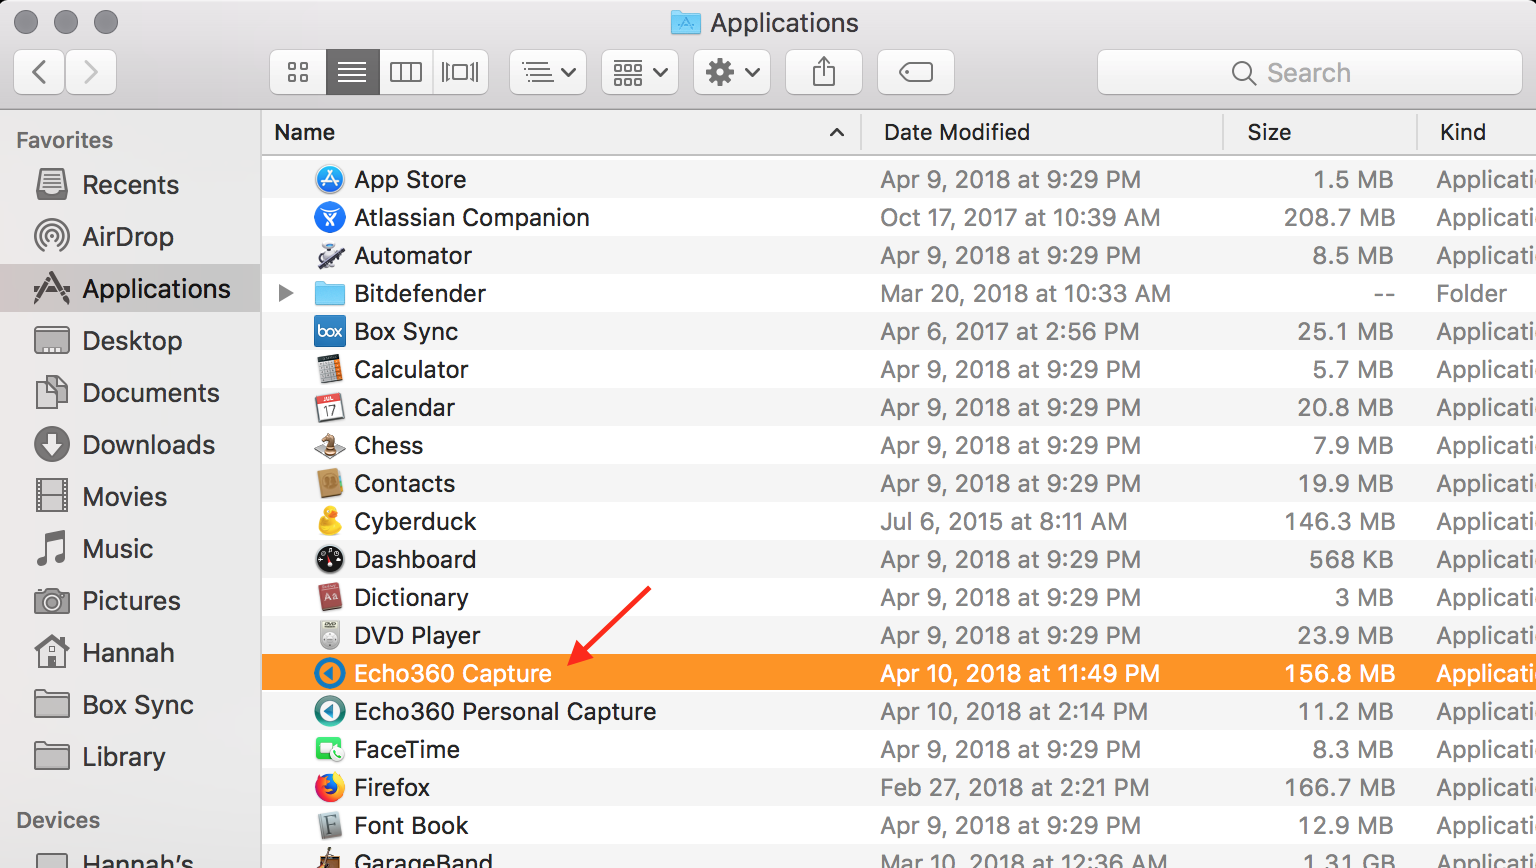 Universal Capture desktop application shown in Applications directory